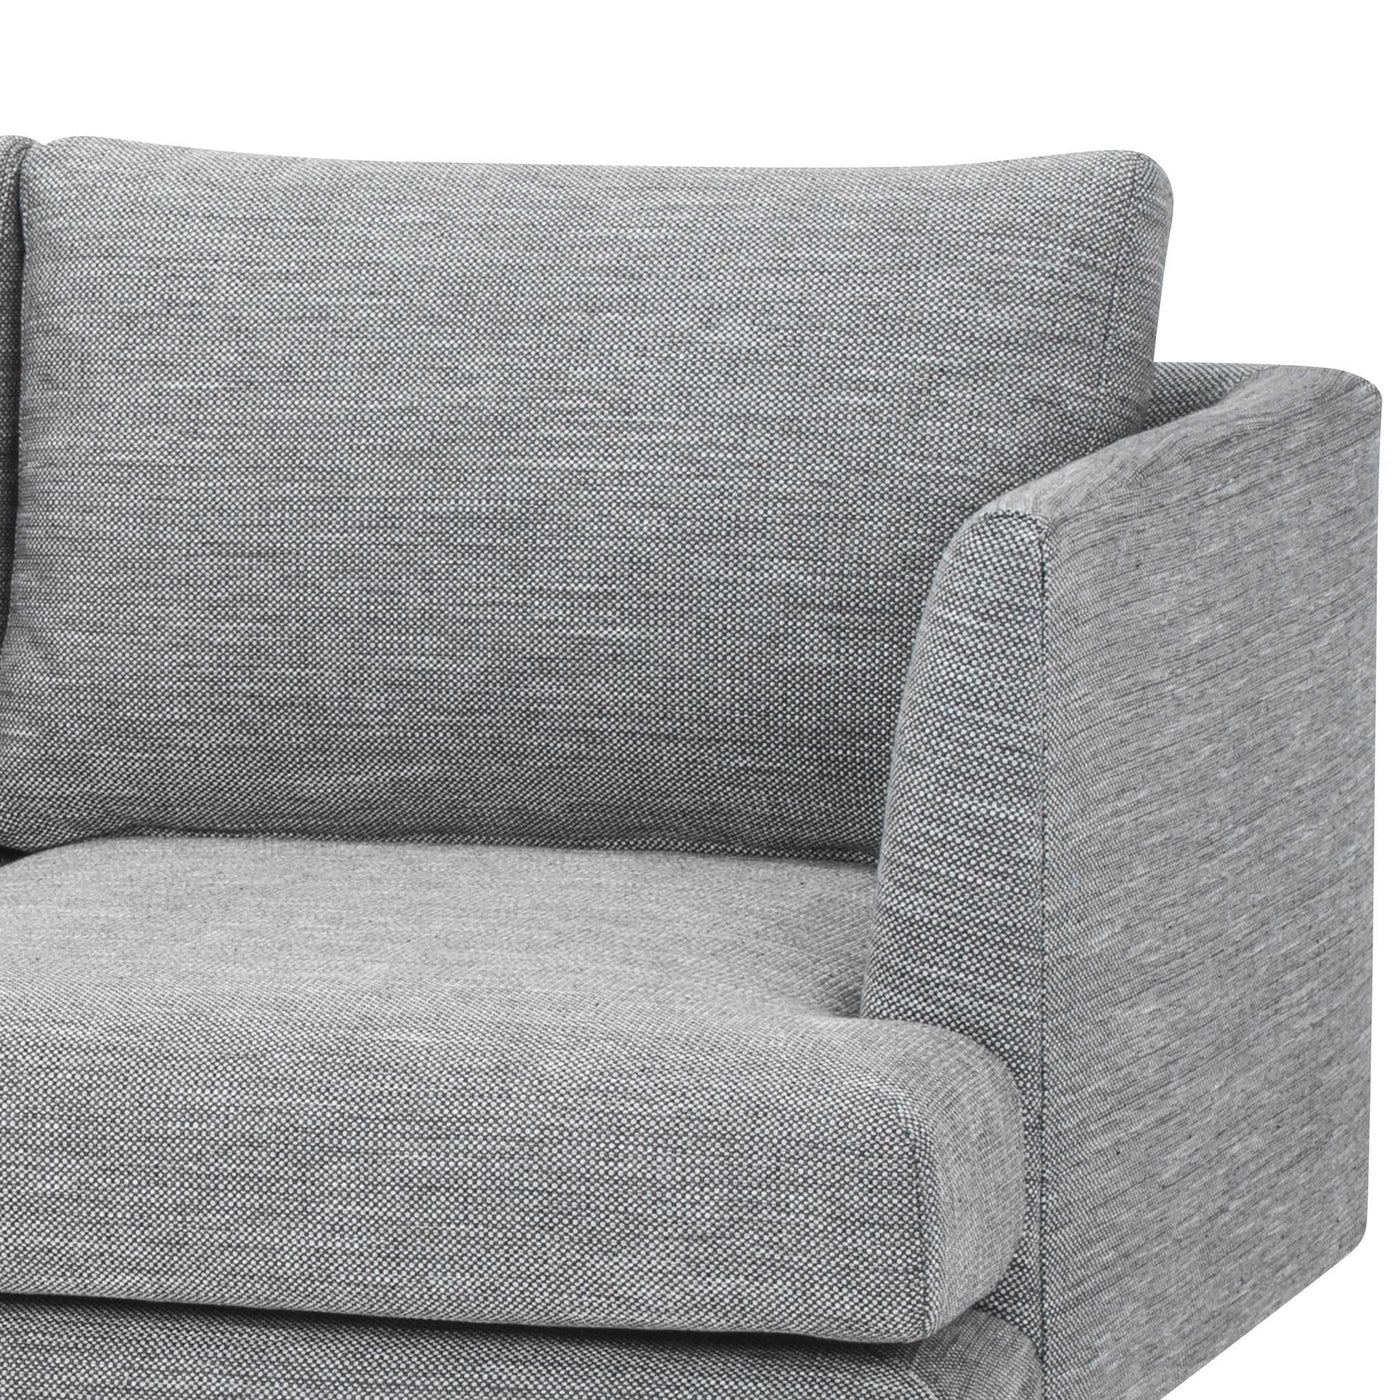 3 Seater Fabric Sofa - Graphite Grey - Natural Legs